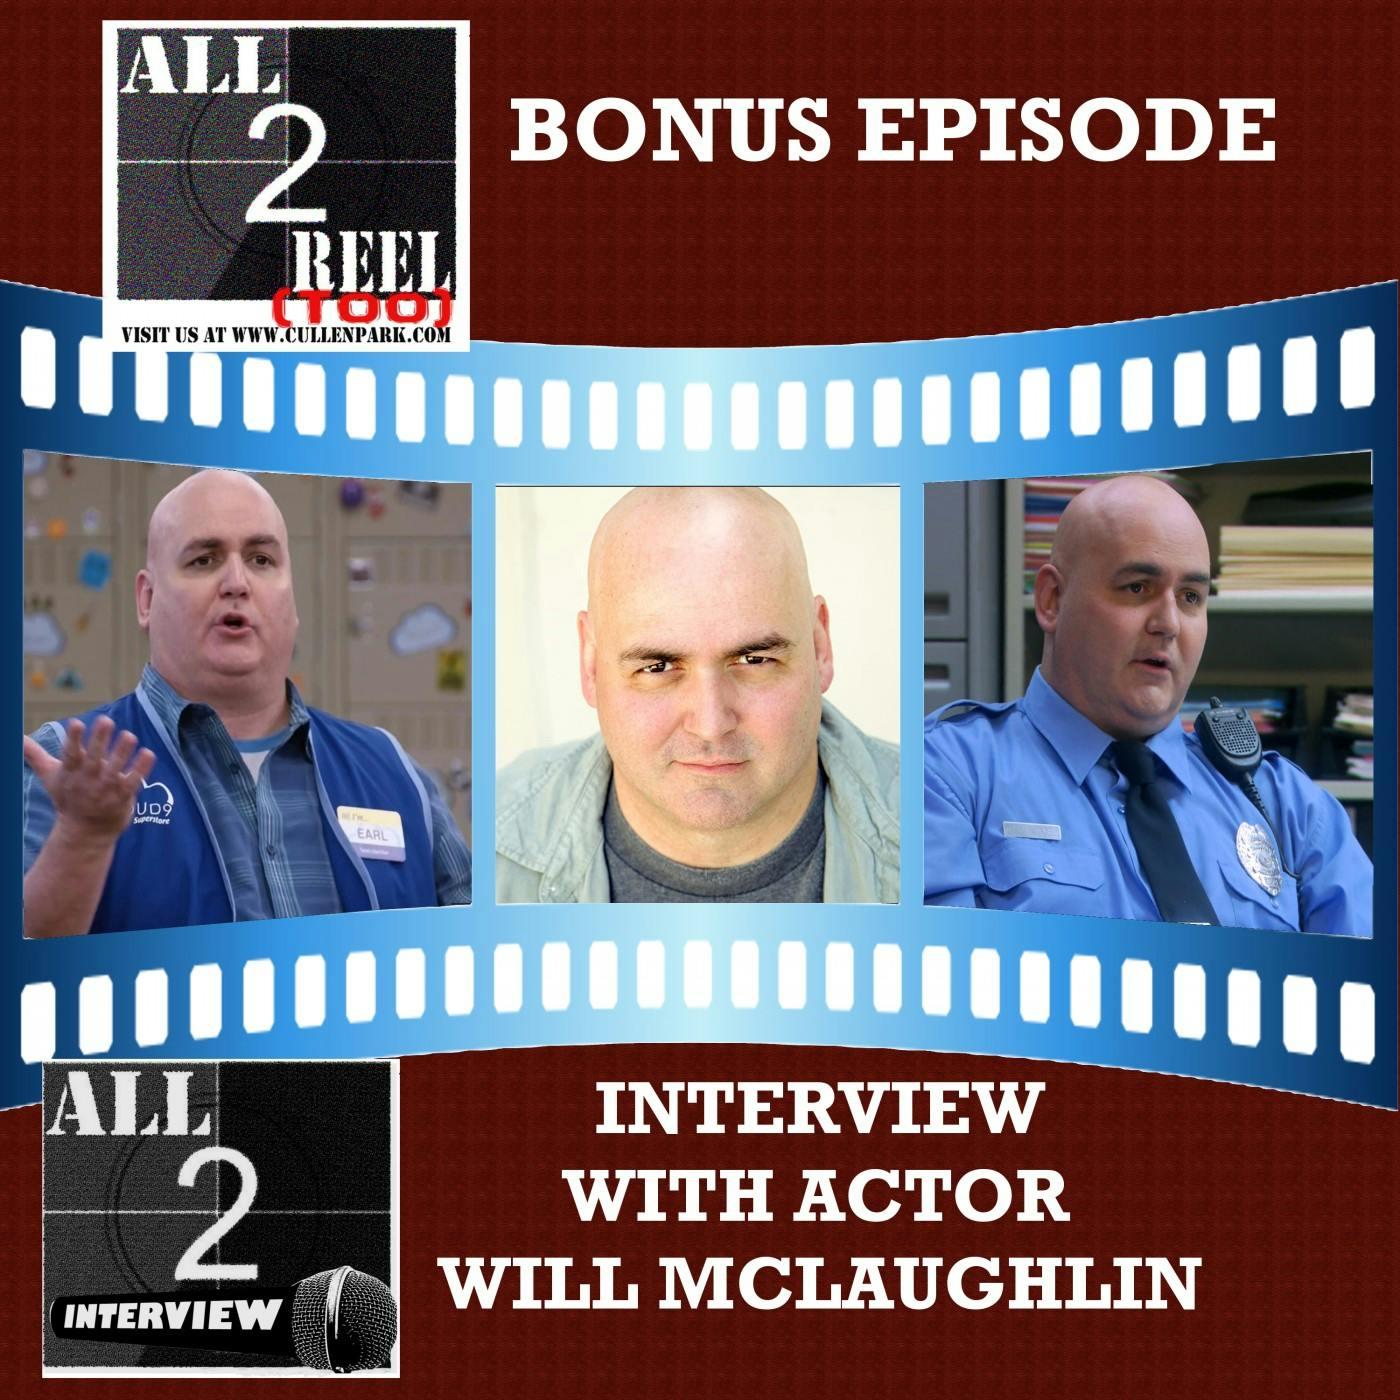 WILL MCLAUGHLIN INTERVIEW